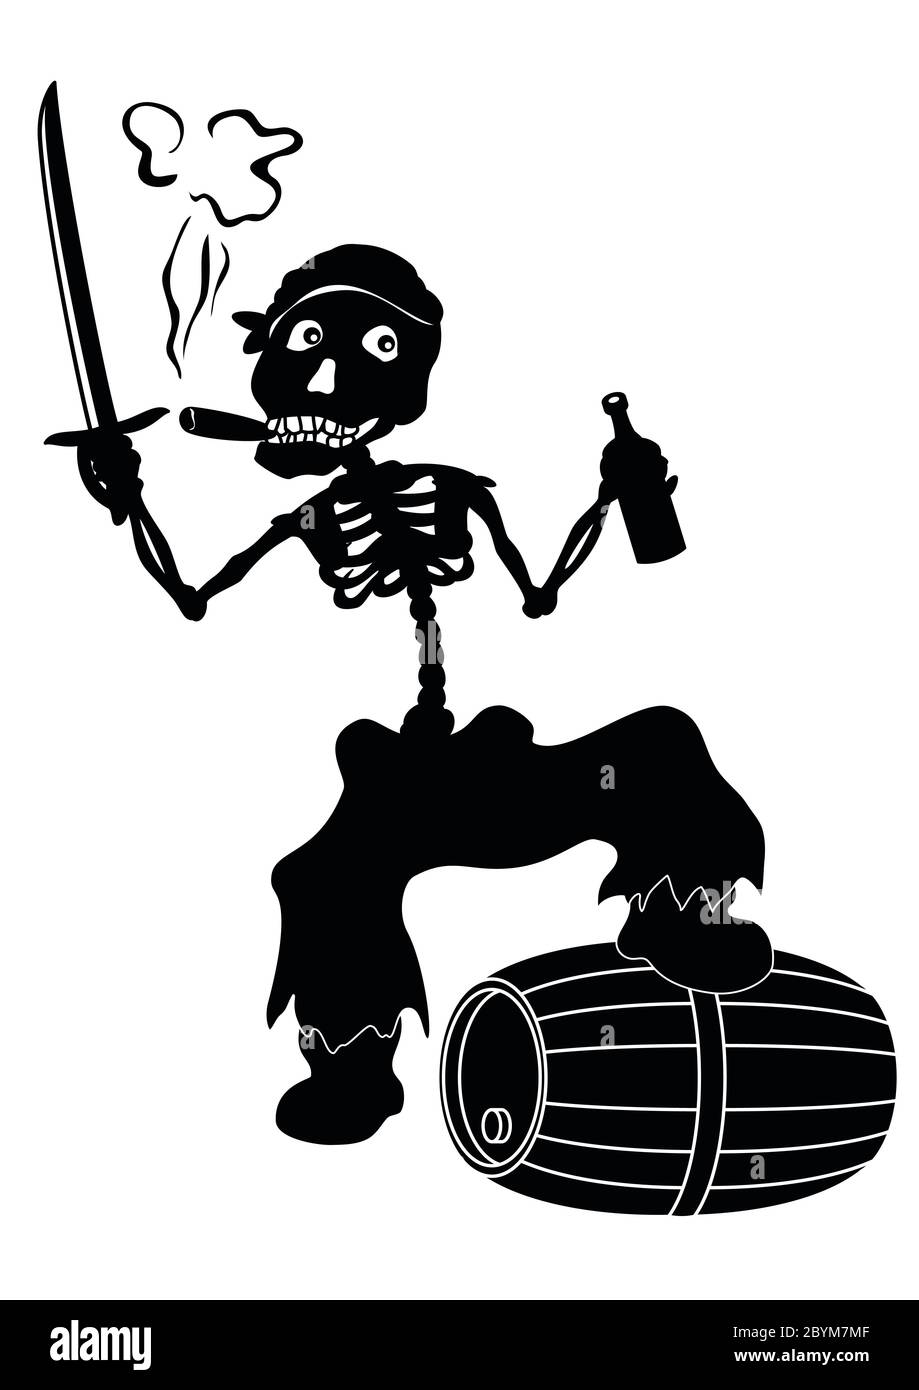 Jolly Roger skeleton, black silhouettes Stock Photo